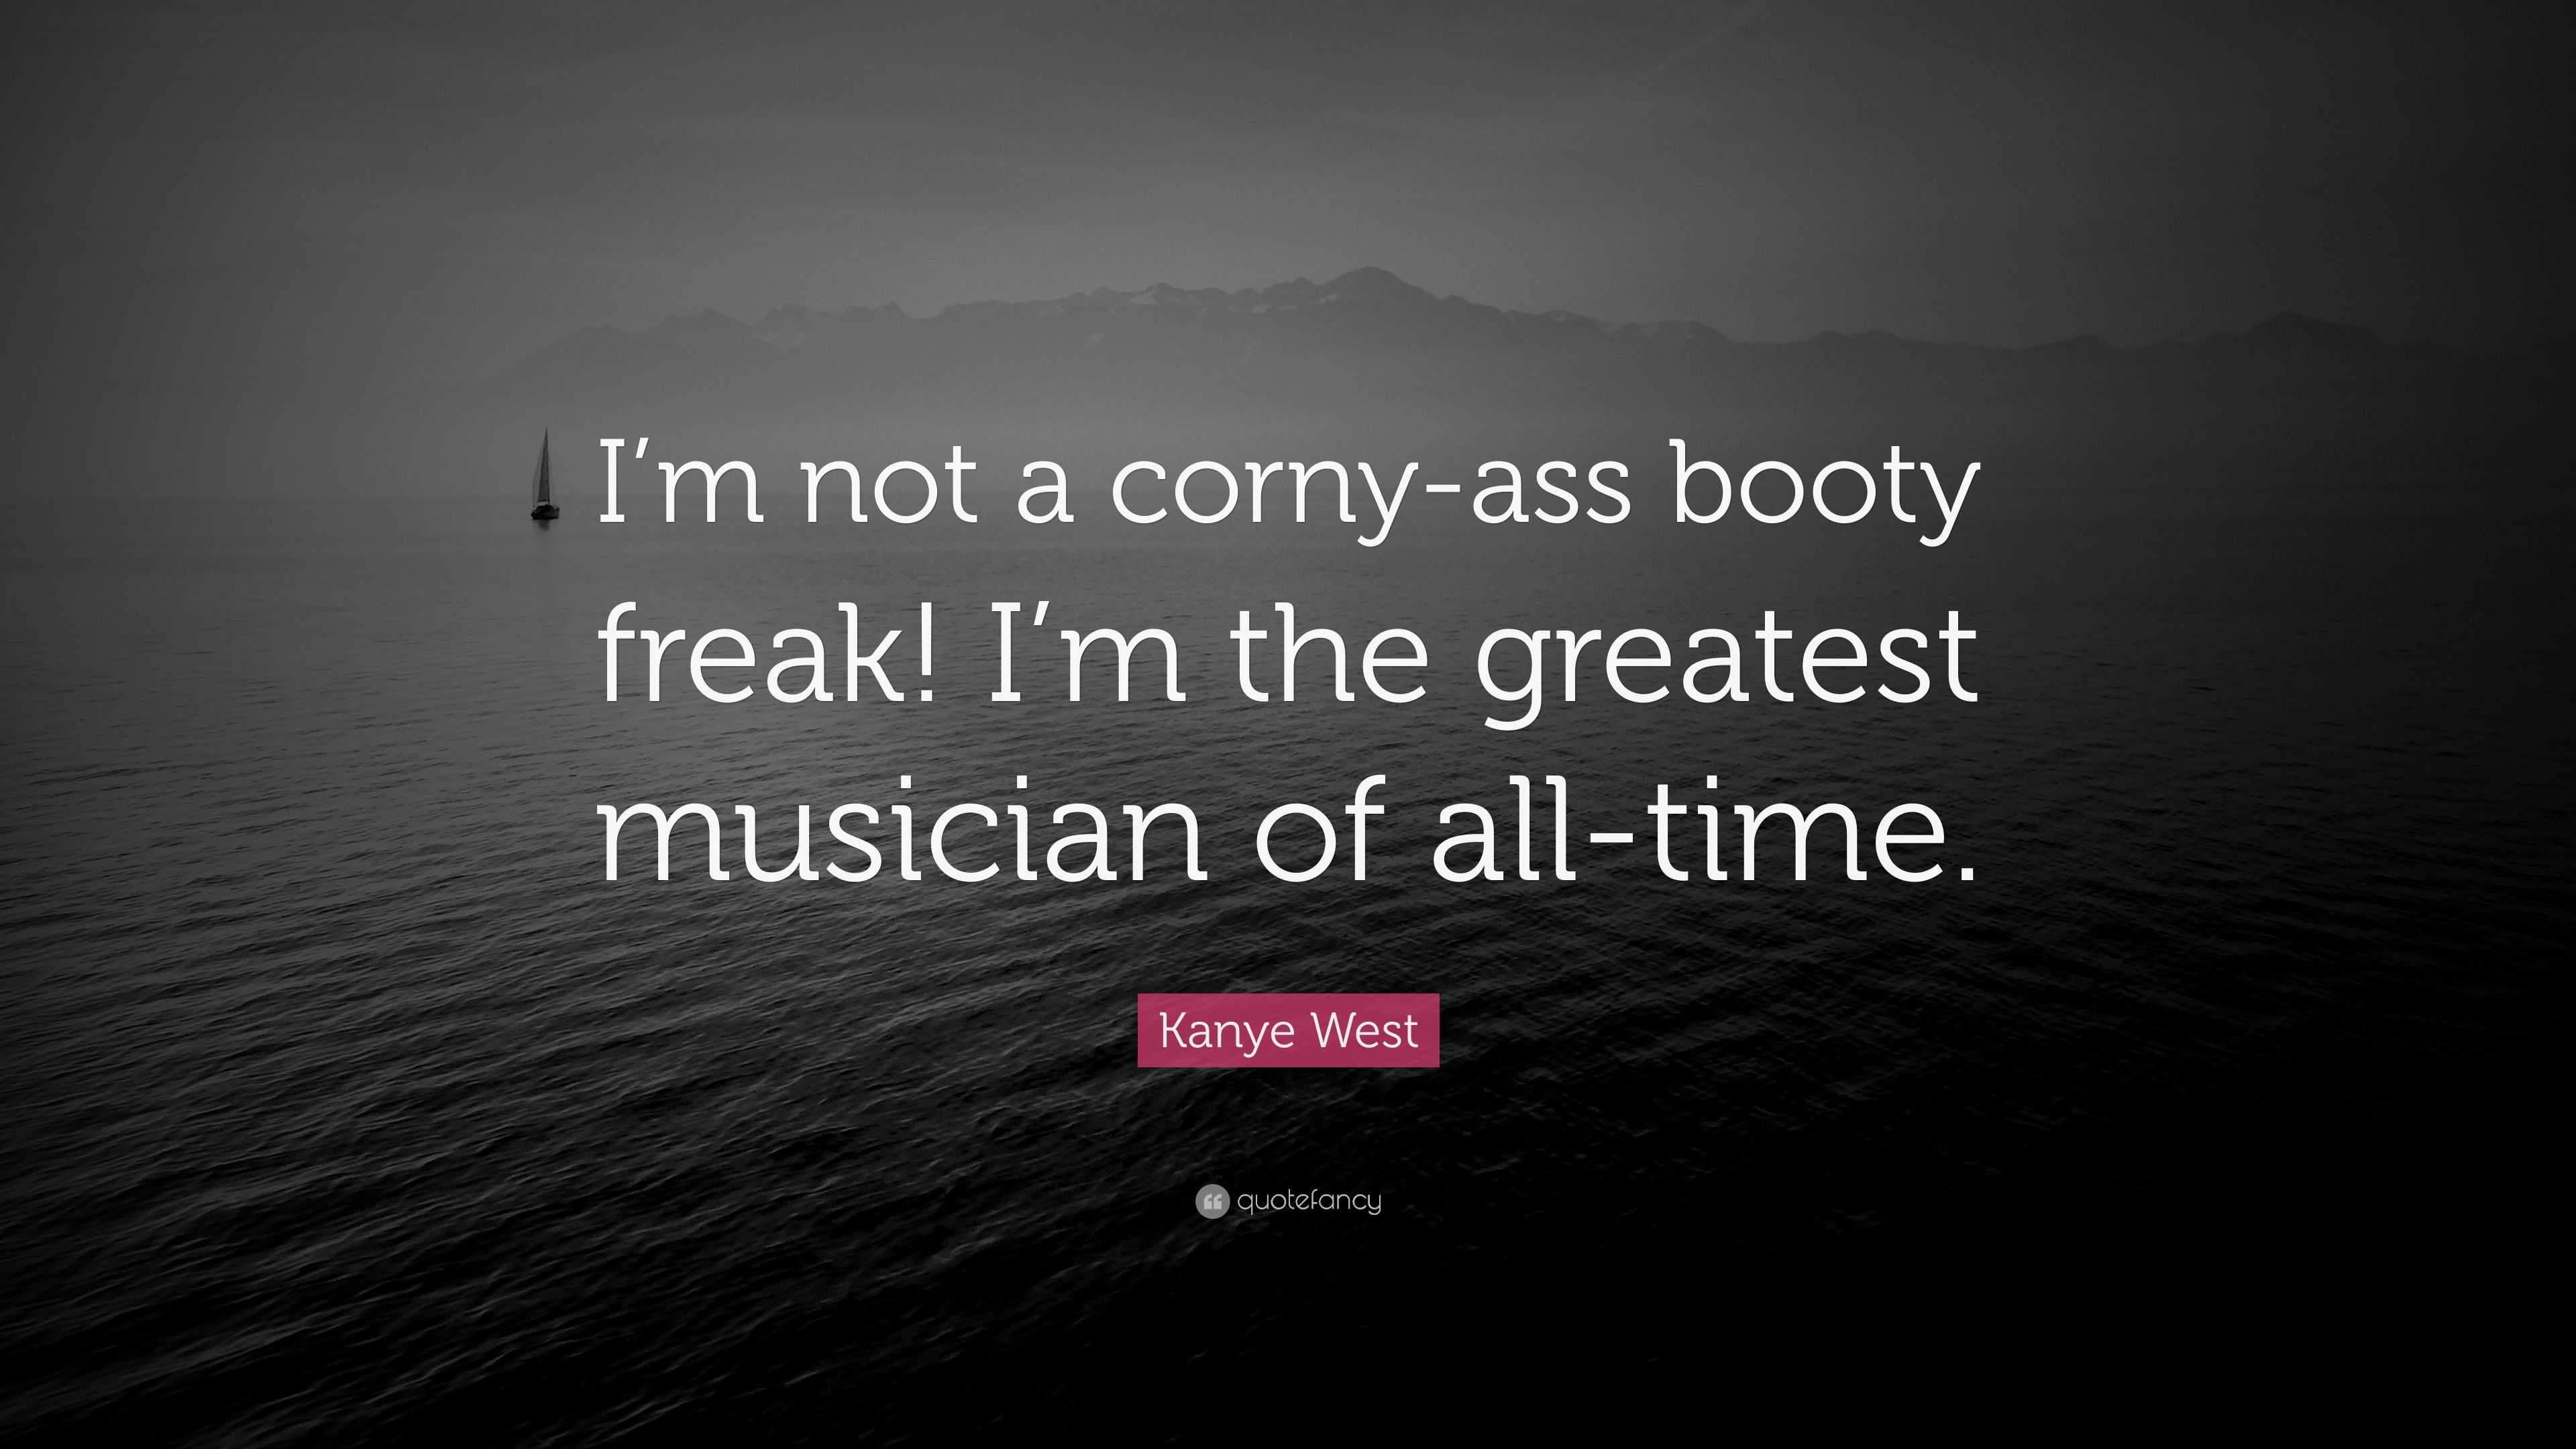 I’m not a corny-ass booty freak! 